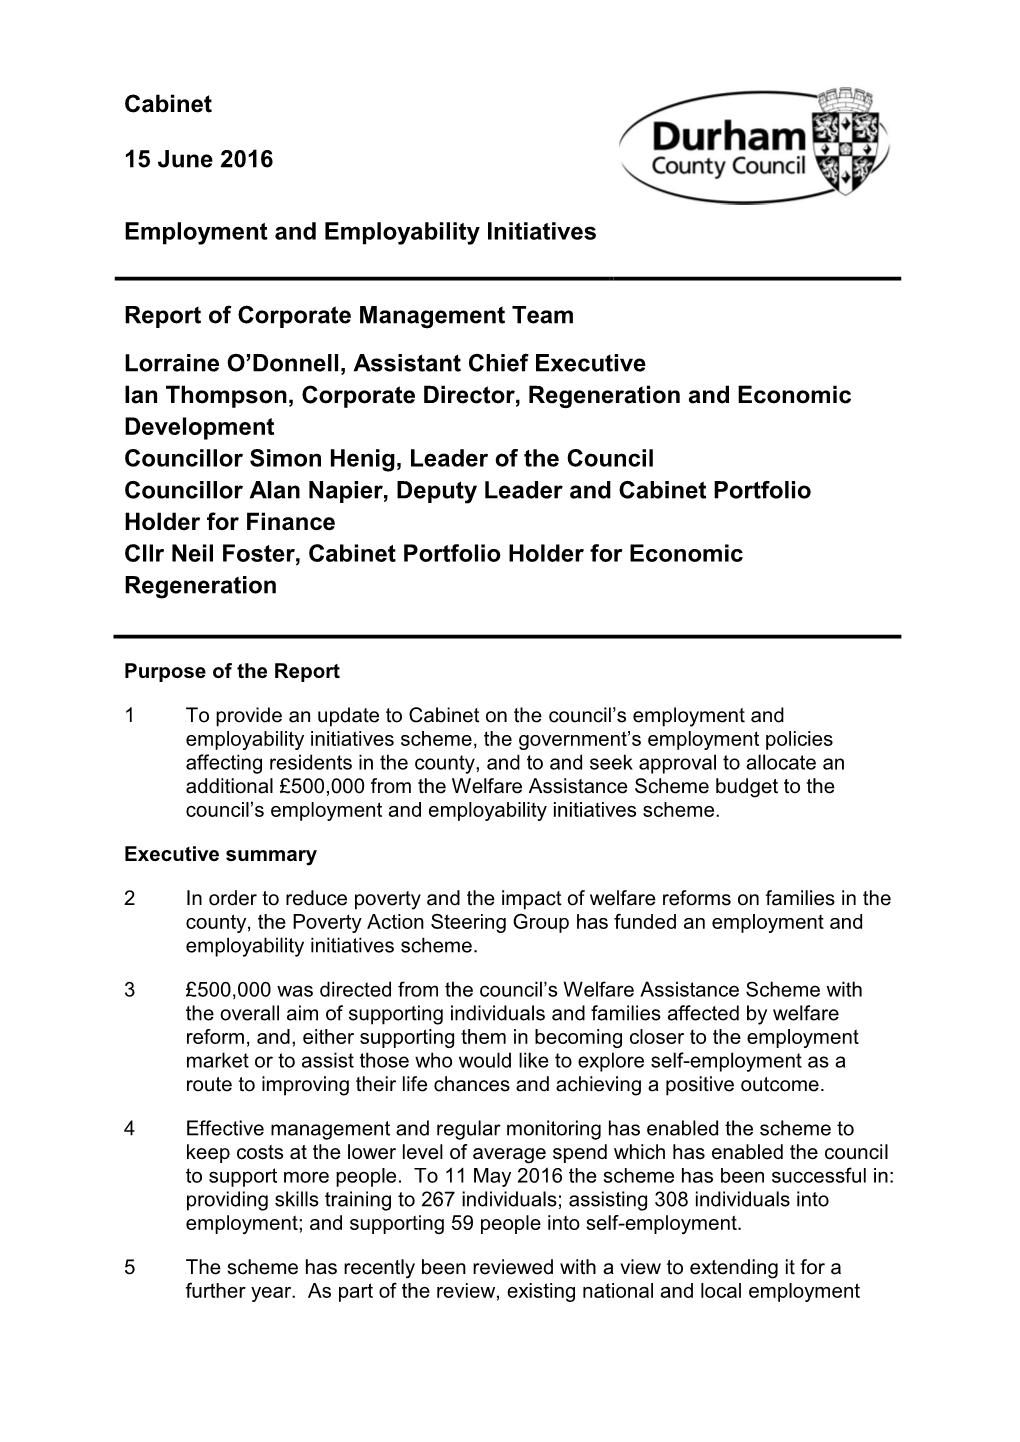 Employment and Employability Initiatives